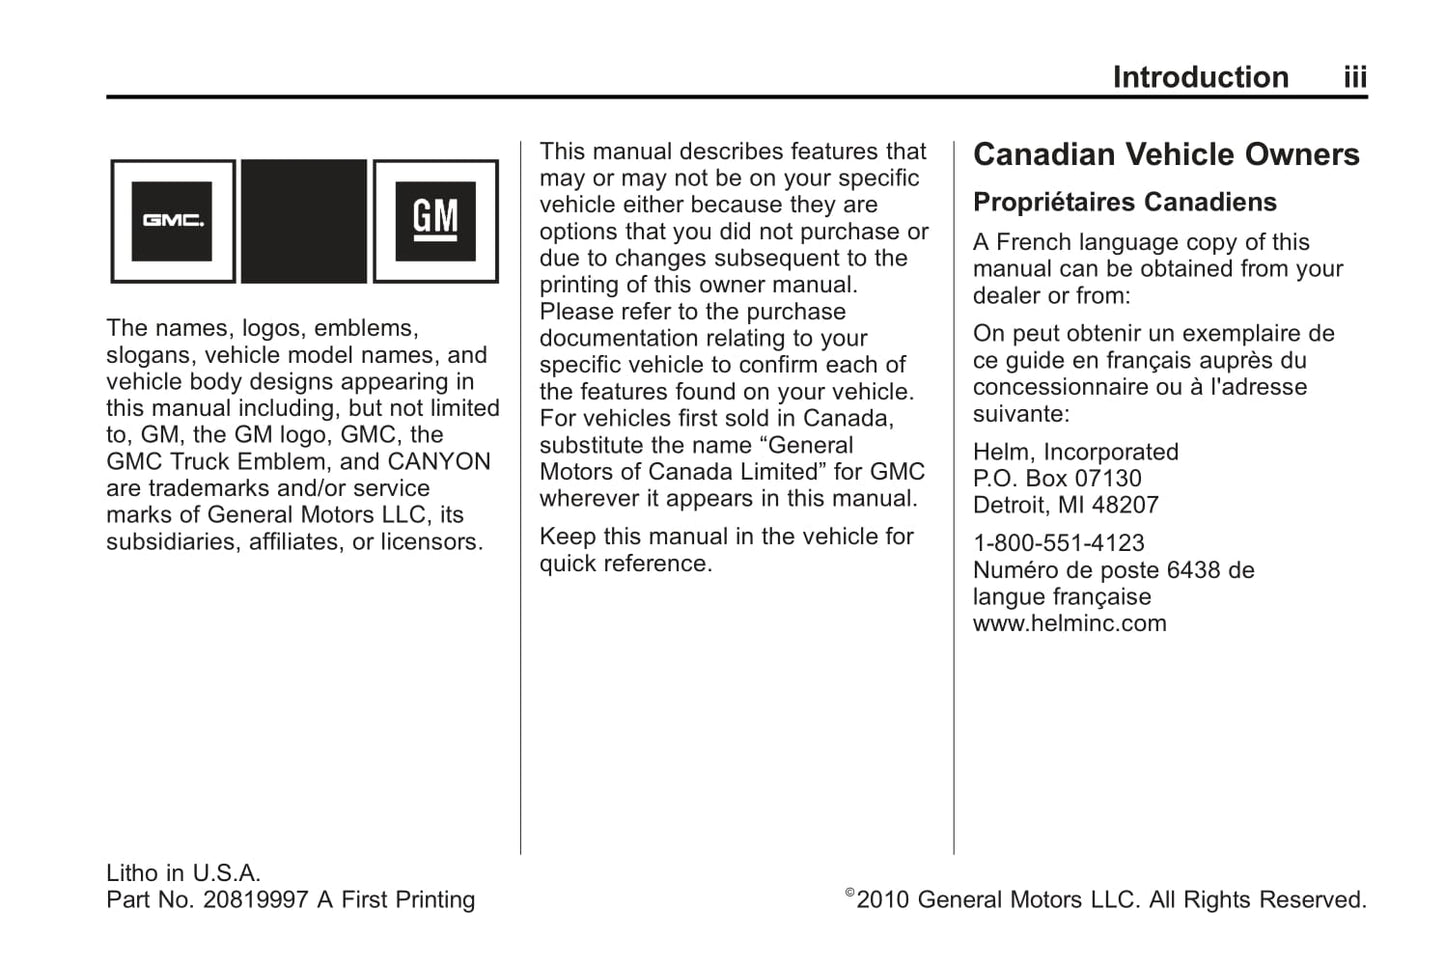 2011 GMC Canyon Owner's Manual | English